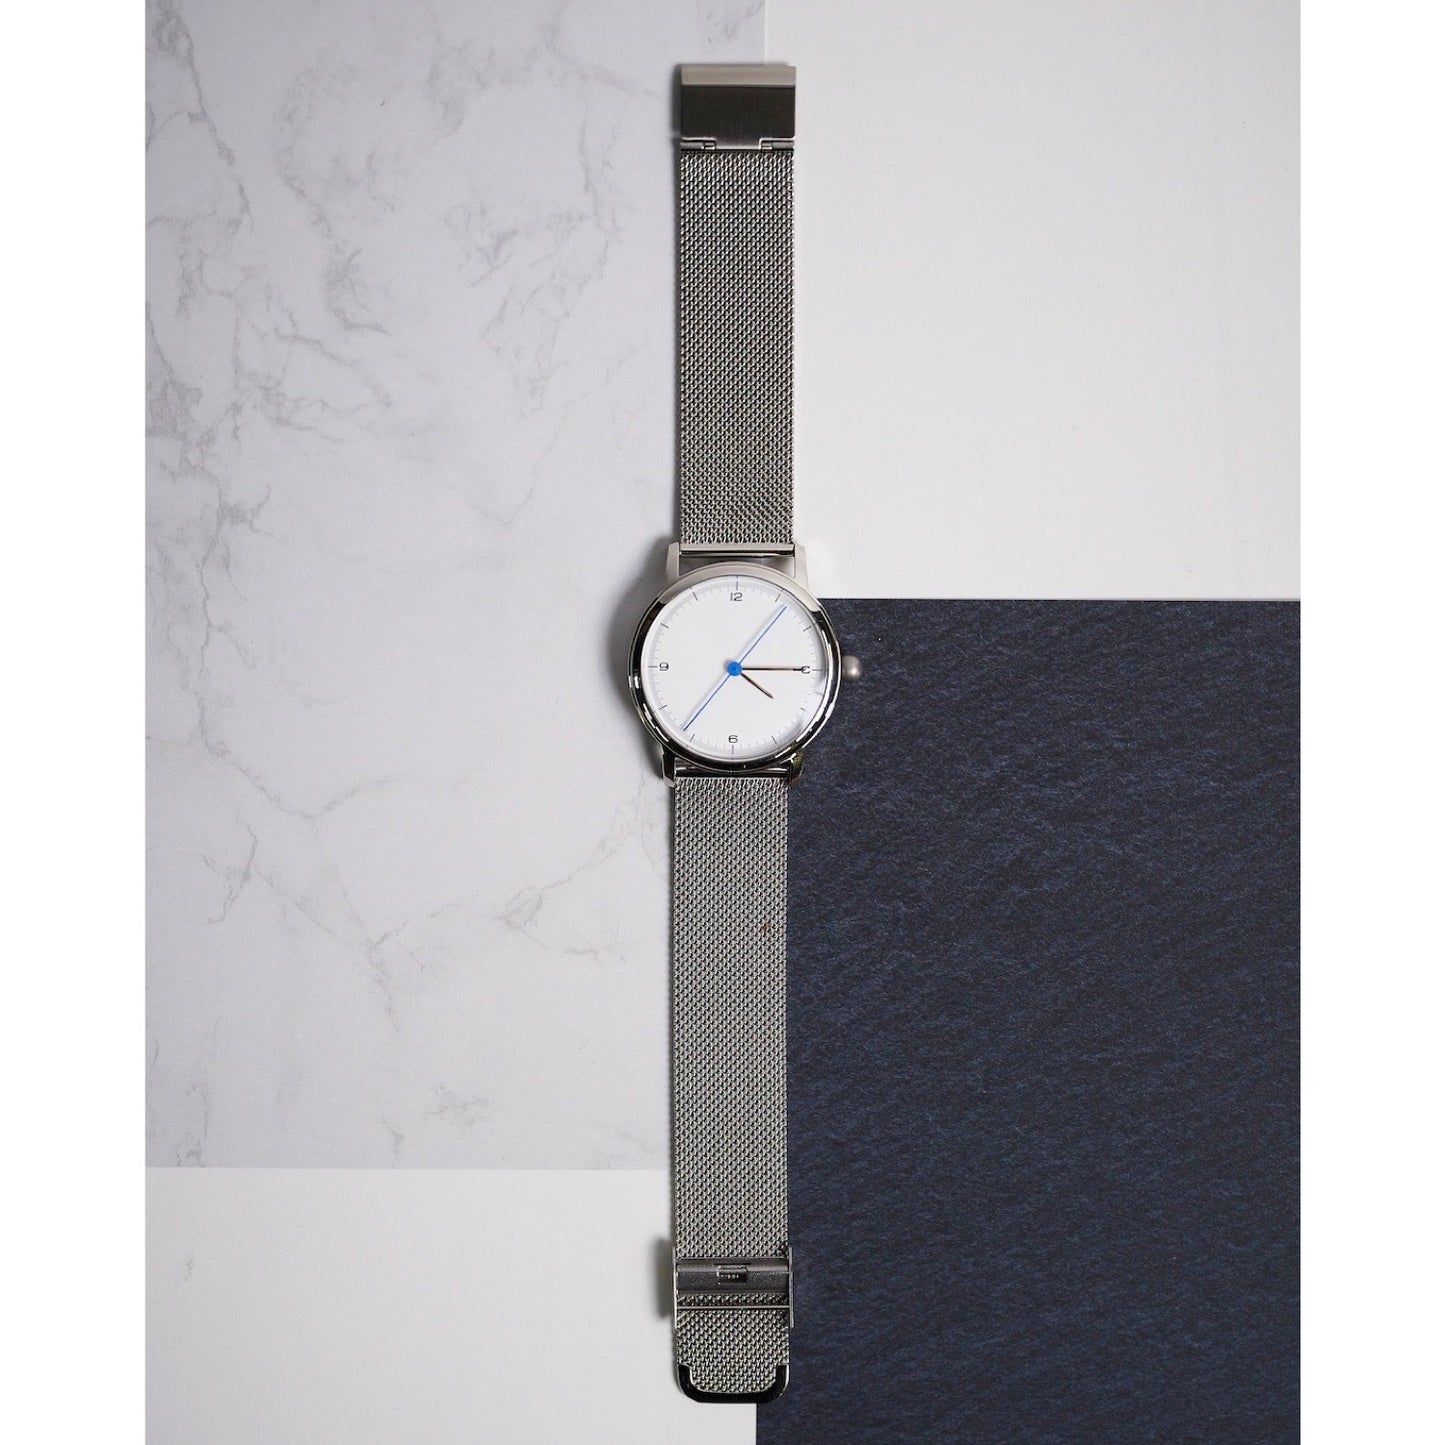 Earth watch designed by Takenobu Igarashi